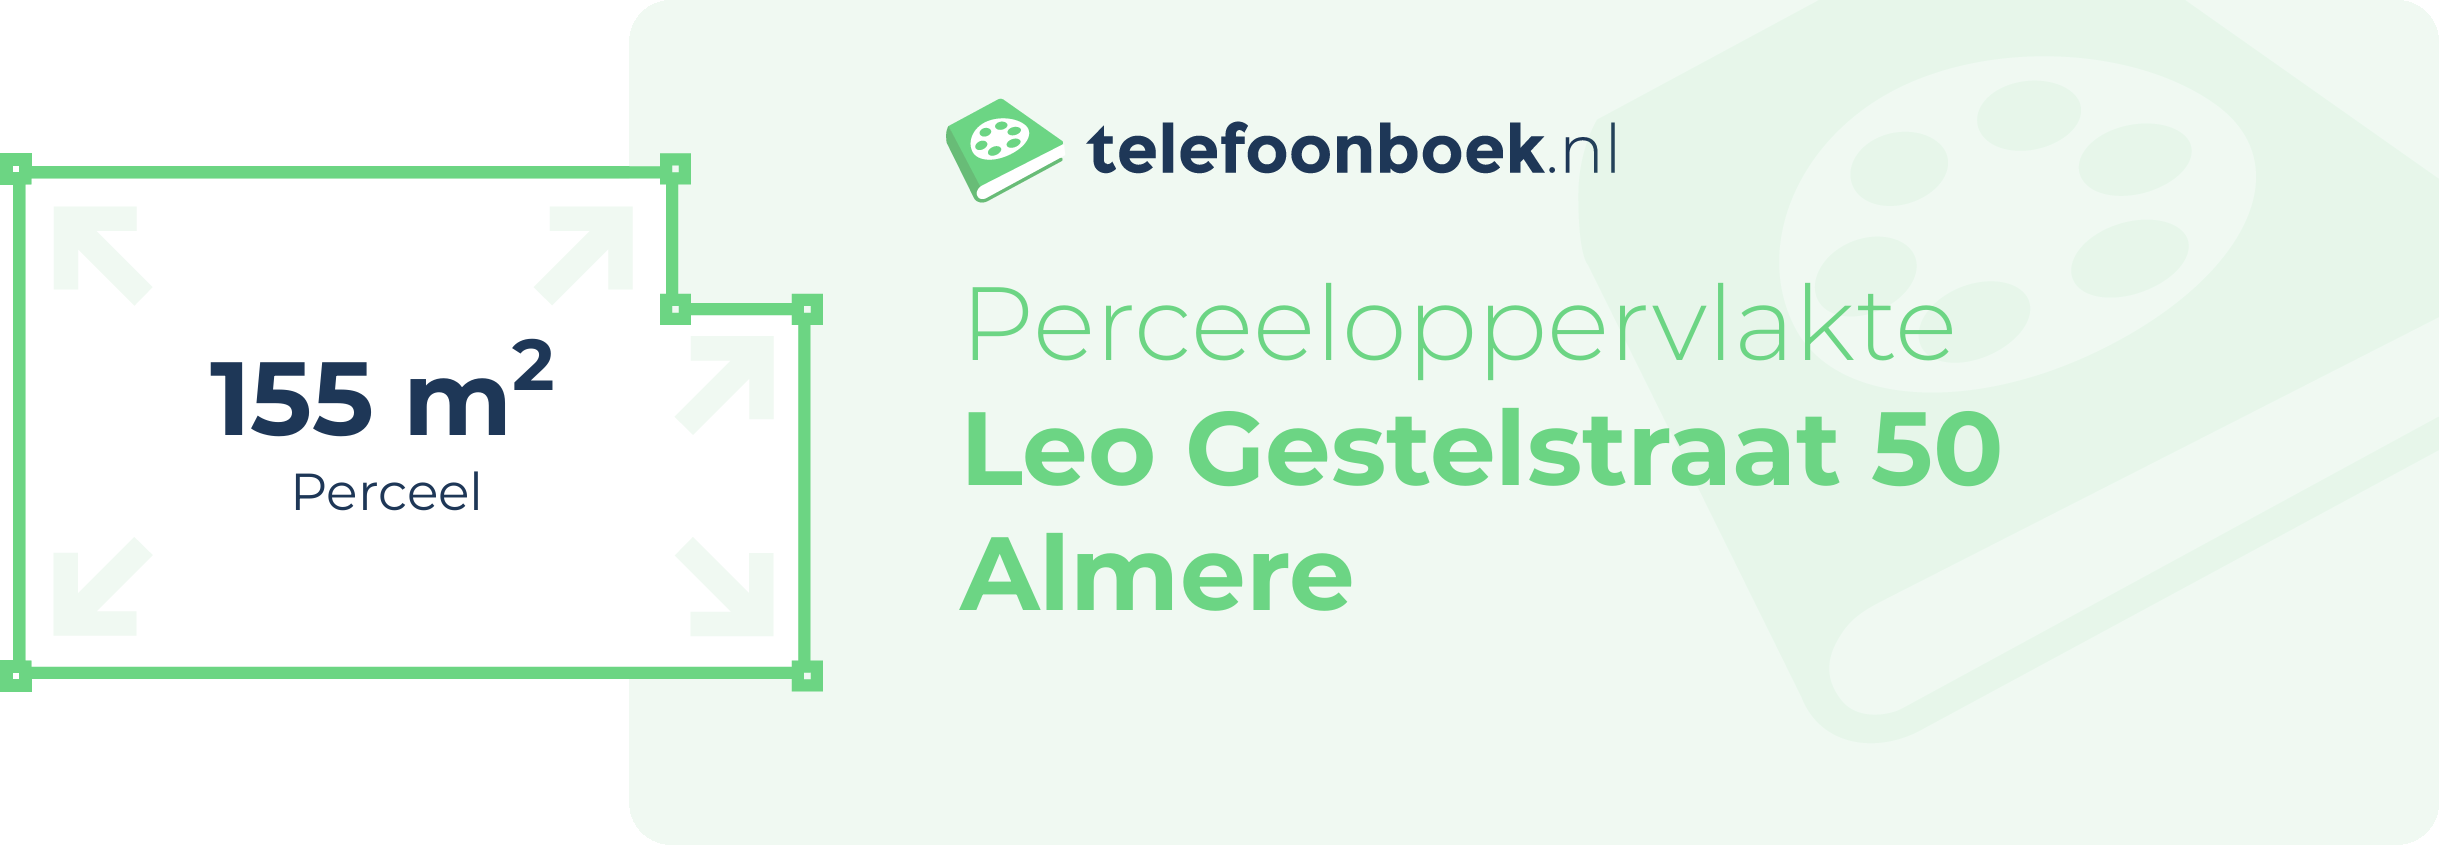 Perceeloppervlakte Leo Gestelstraat 50 Almere